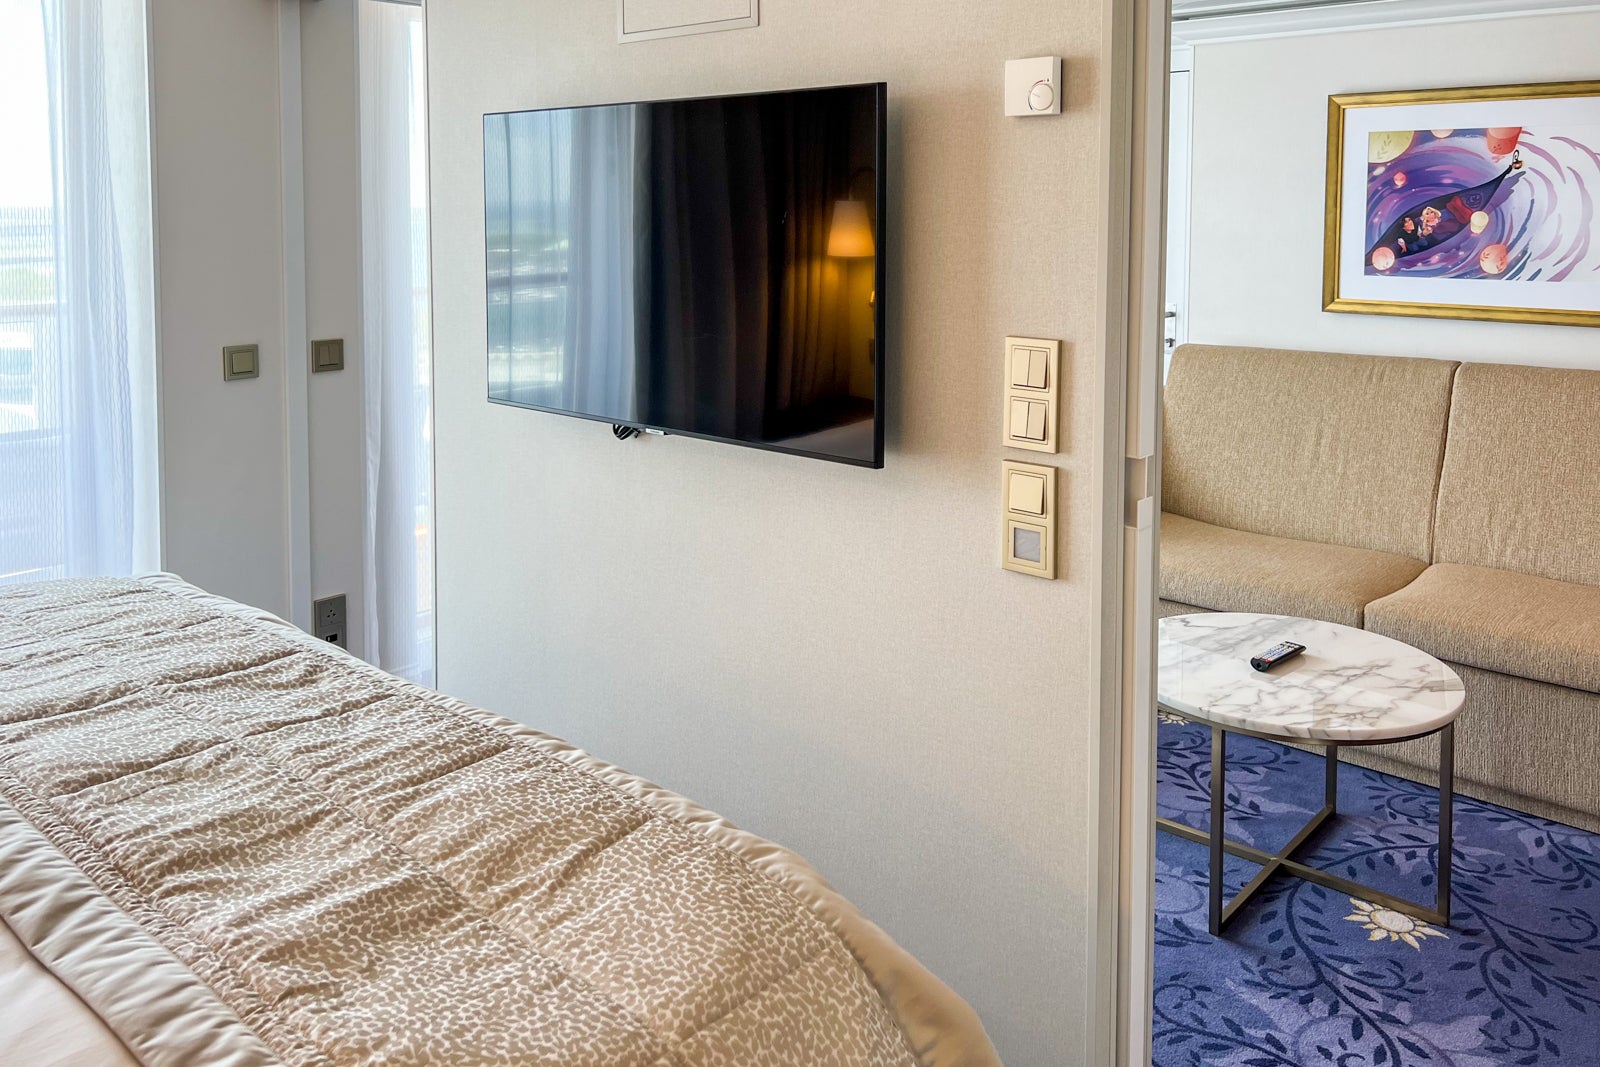 disney cruise 3 bedroom suite